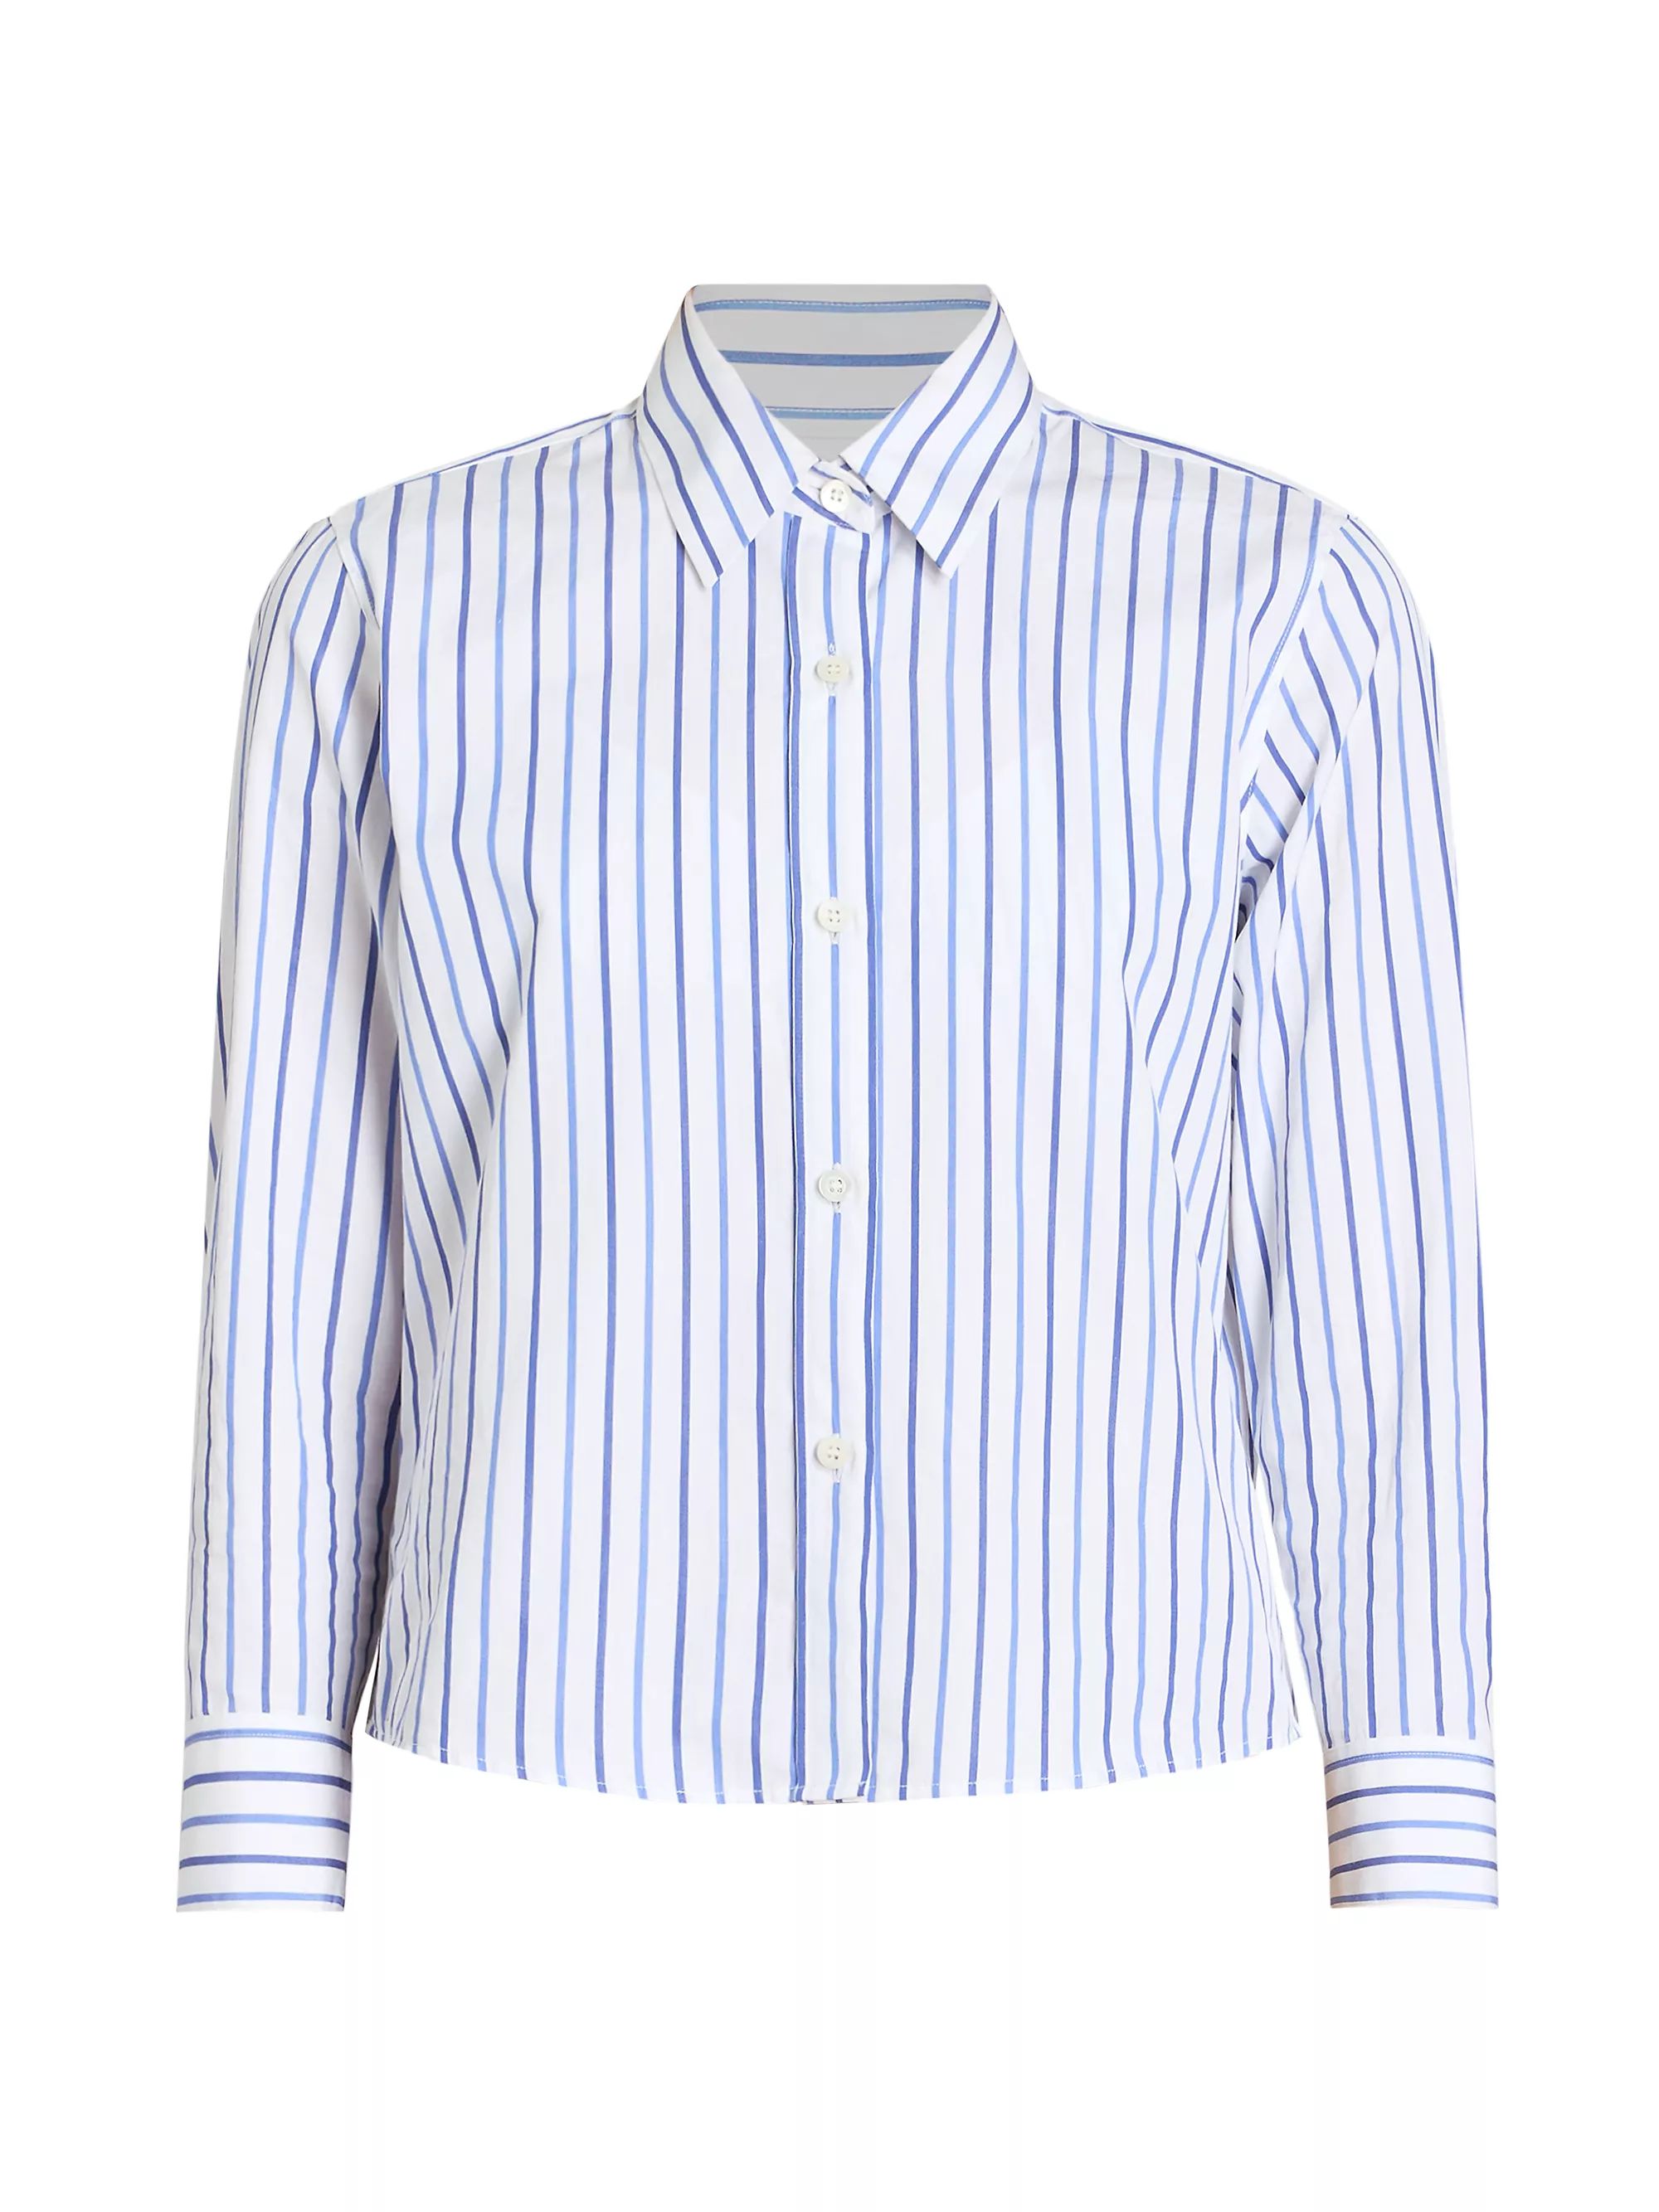 Clavini Striped Cotton Shirt | Saks Fifth Avenue